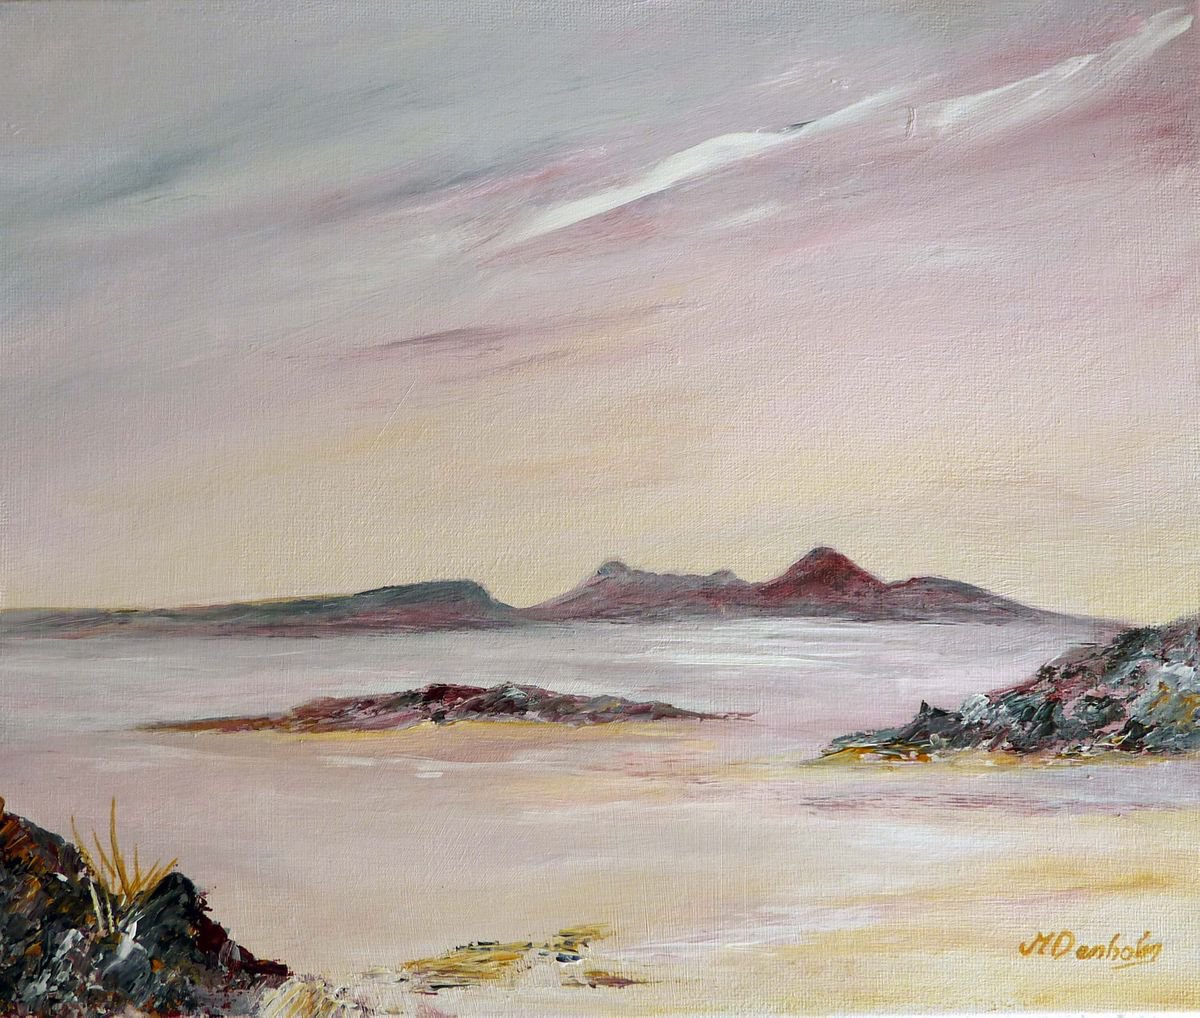 Memories of a Midsummer Evening - A Scottish Seascape by Margaret Denholm